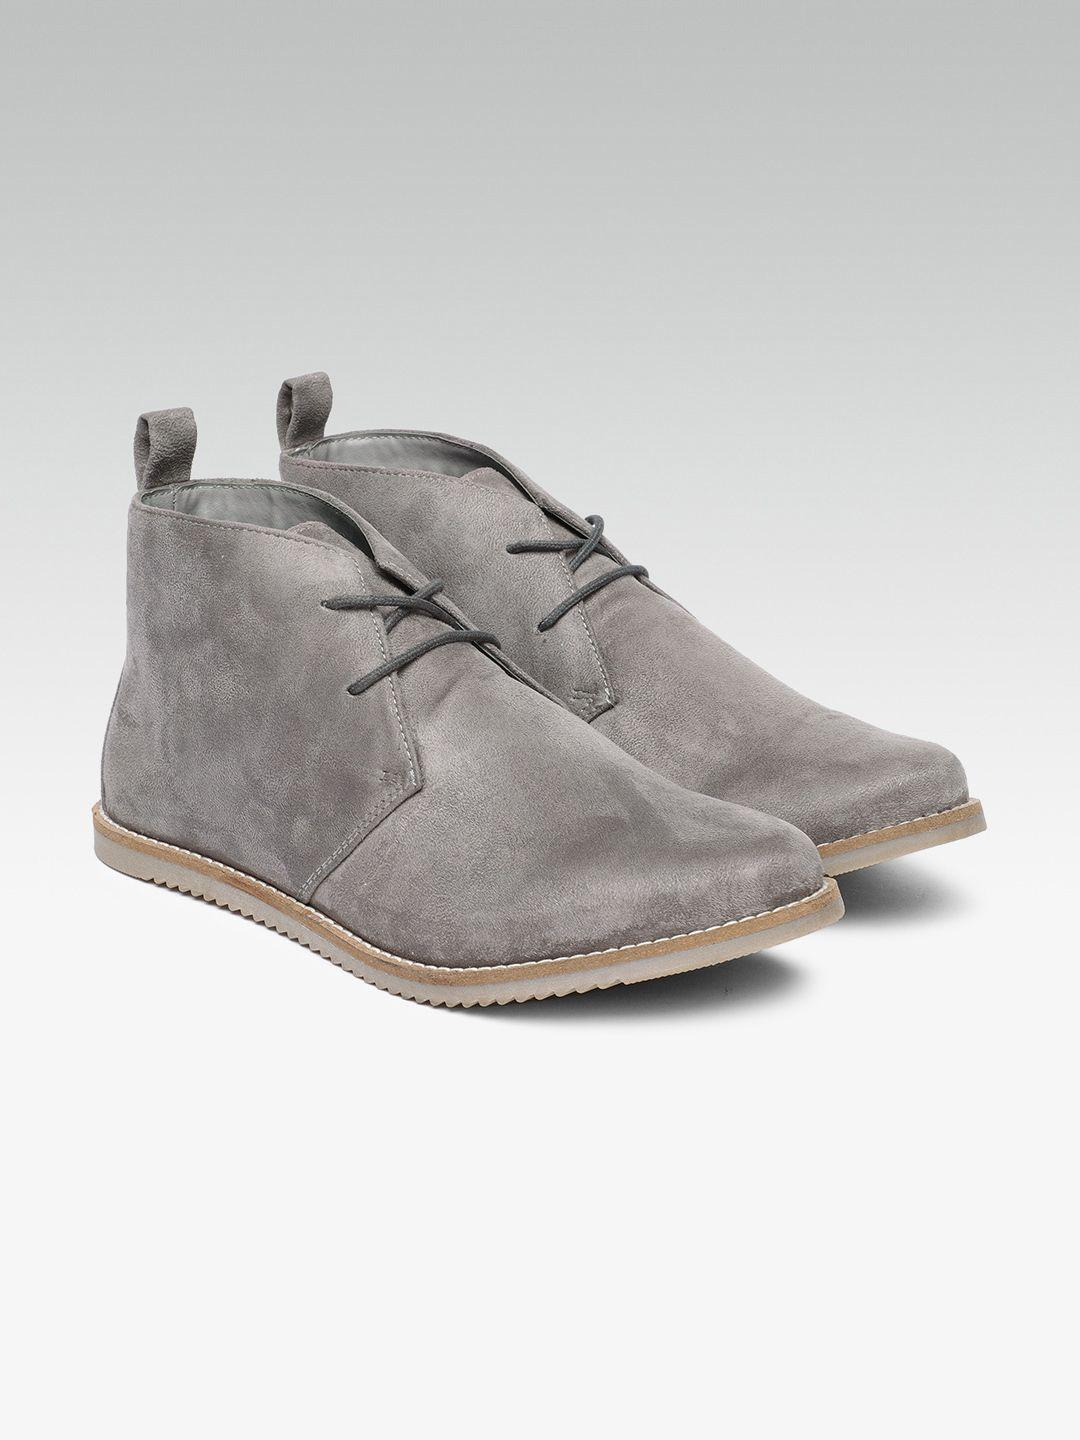 carlton-london-women-grey-flat-boots